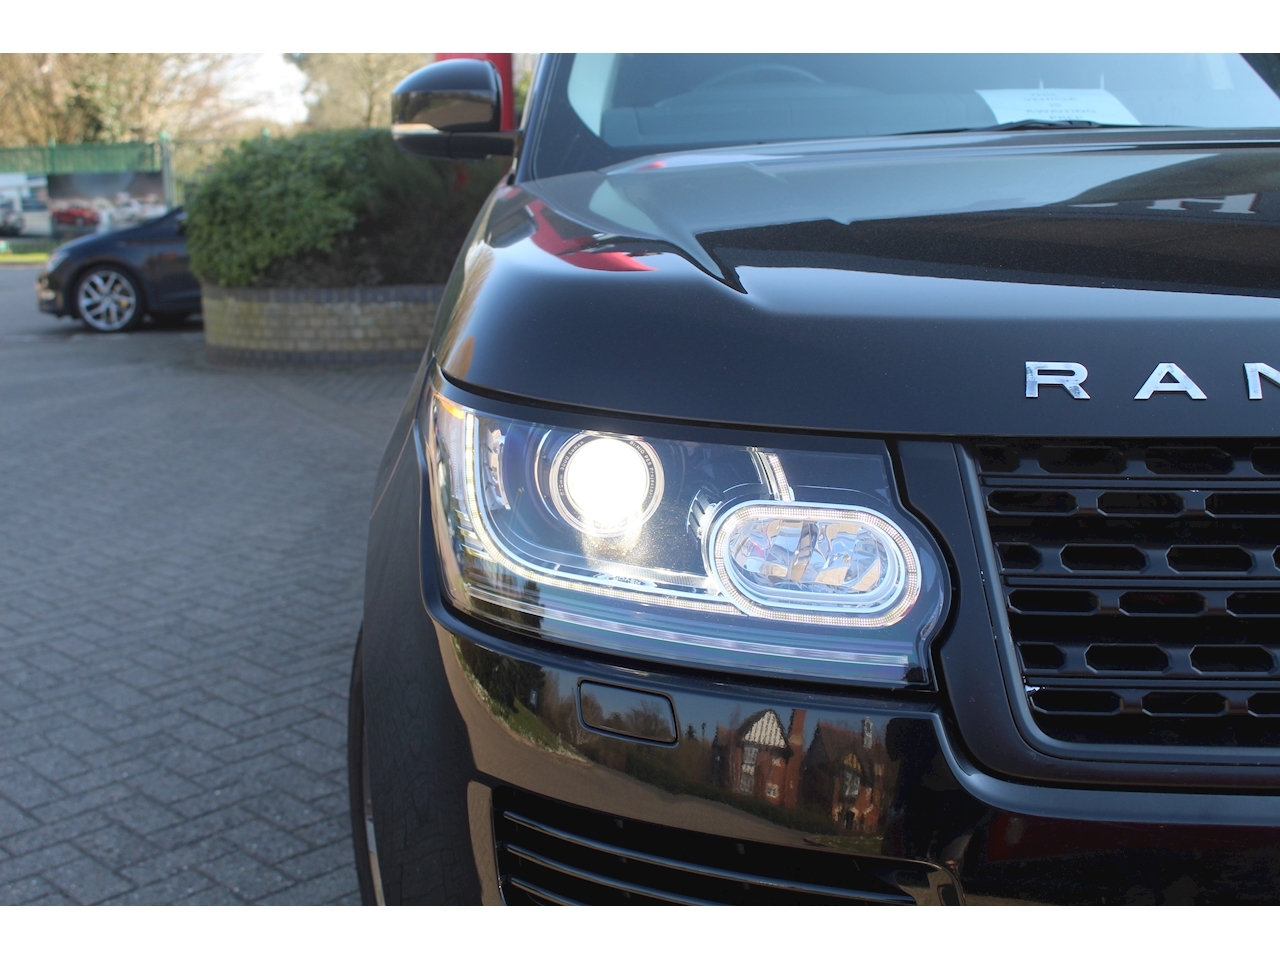 Range Rover Tdv6 Vogue Estate 3.0 Automatic Diesel